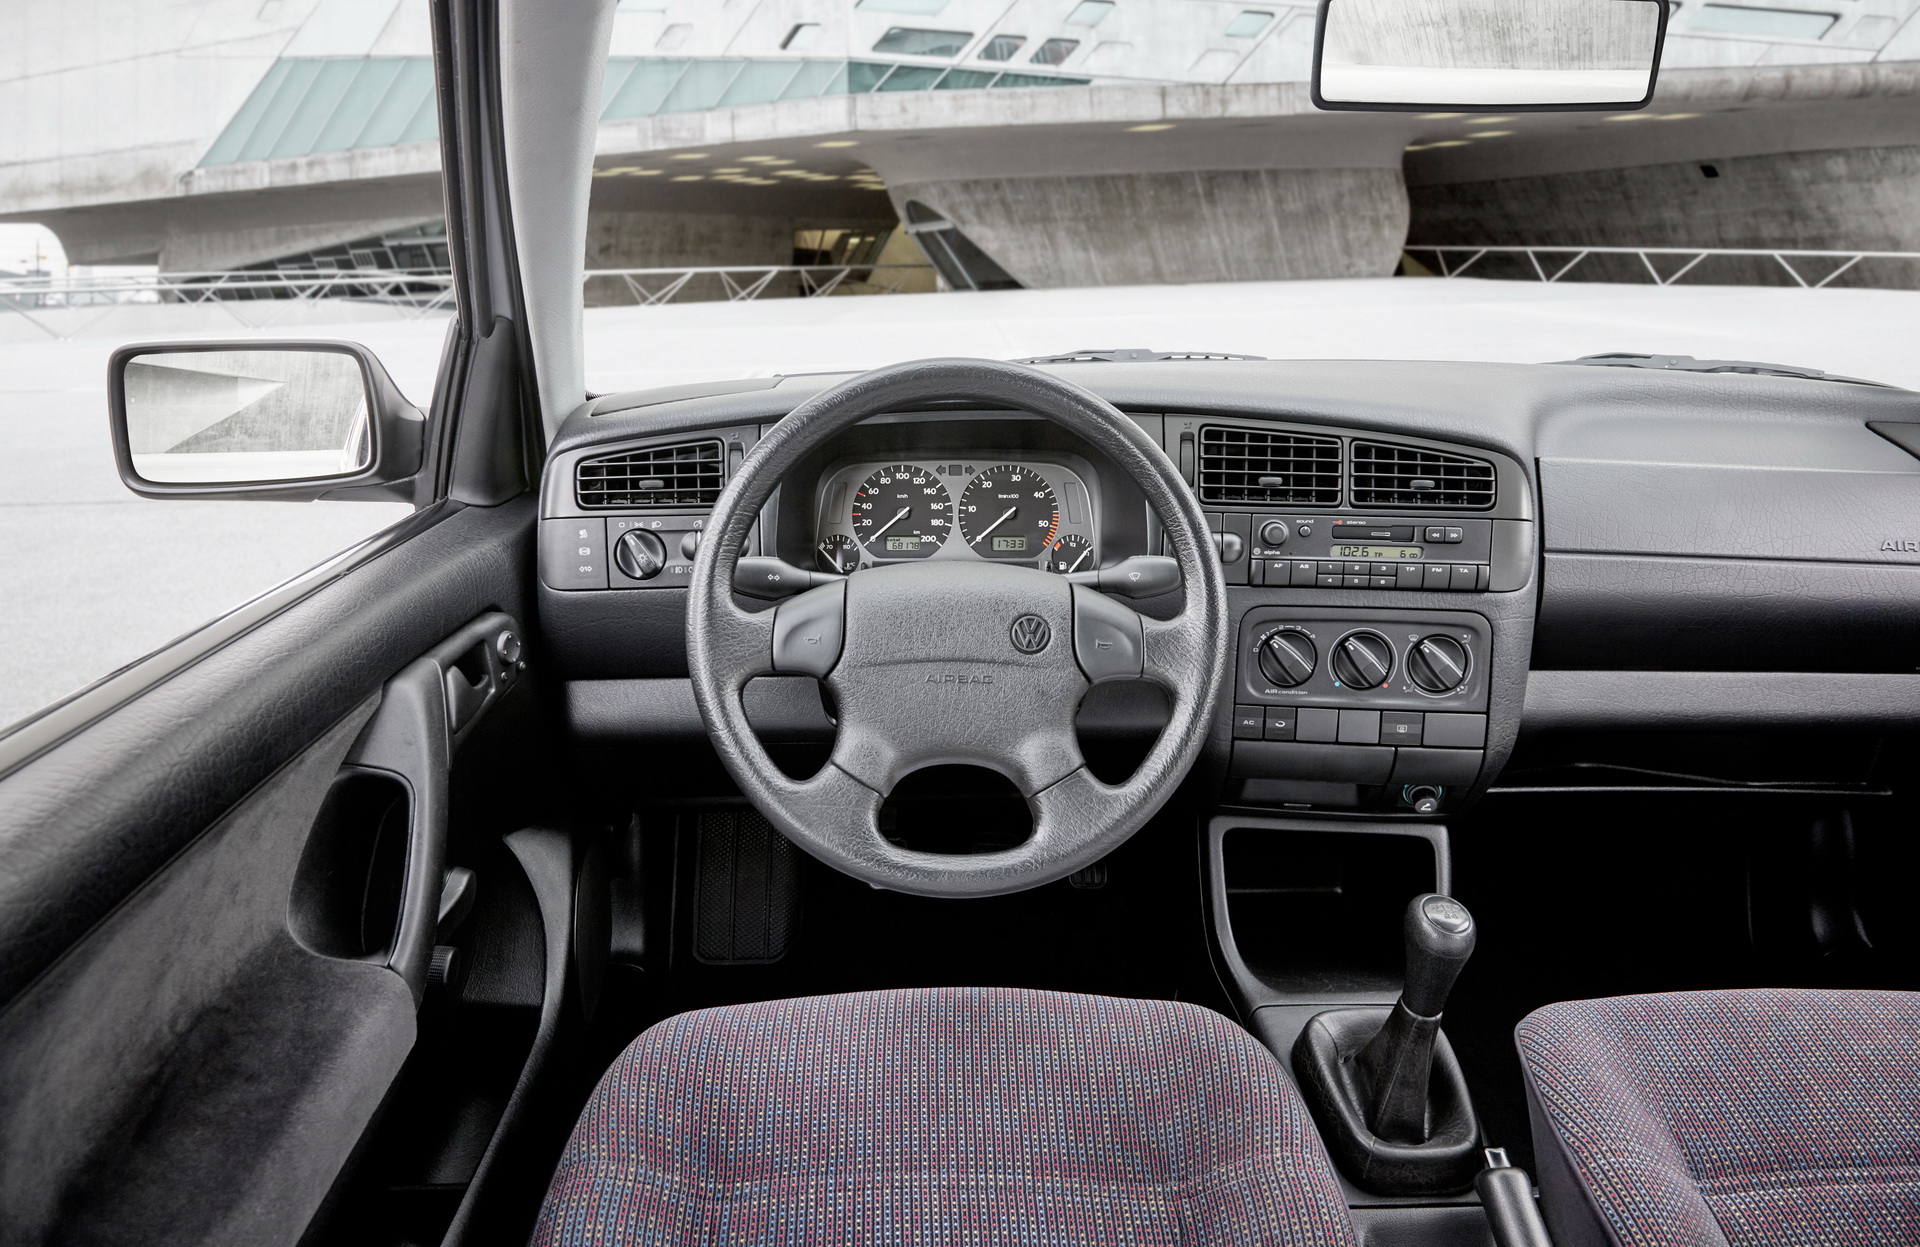 VW Golf 3 CityStomer (1993): Classic Cars